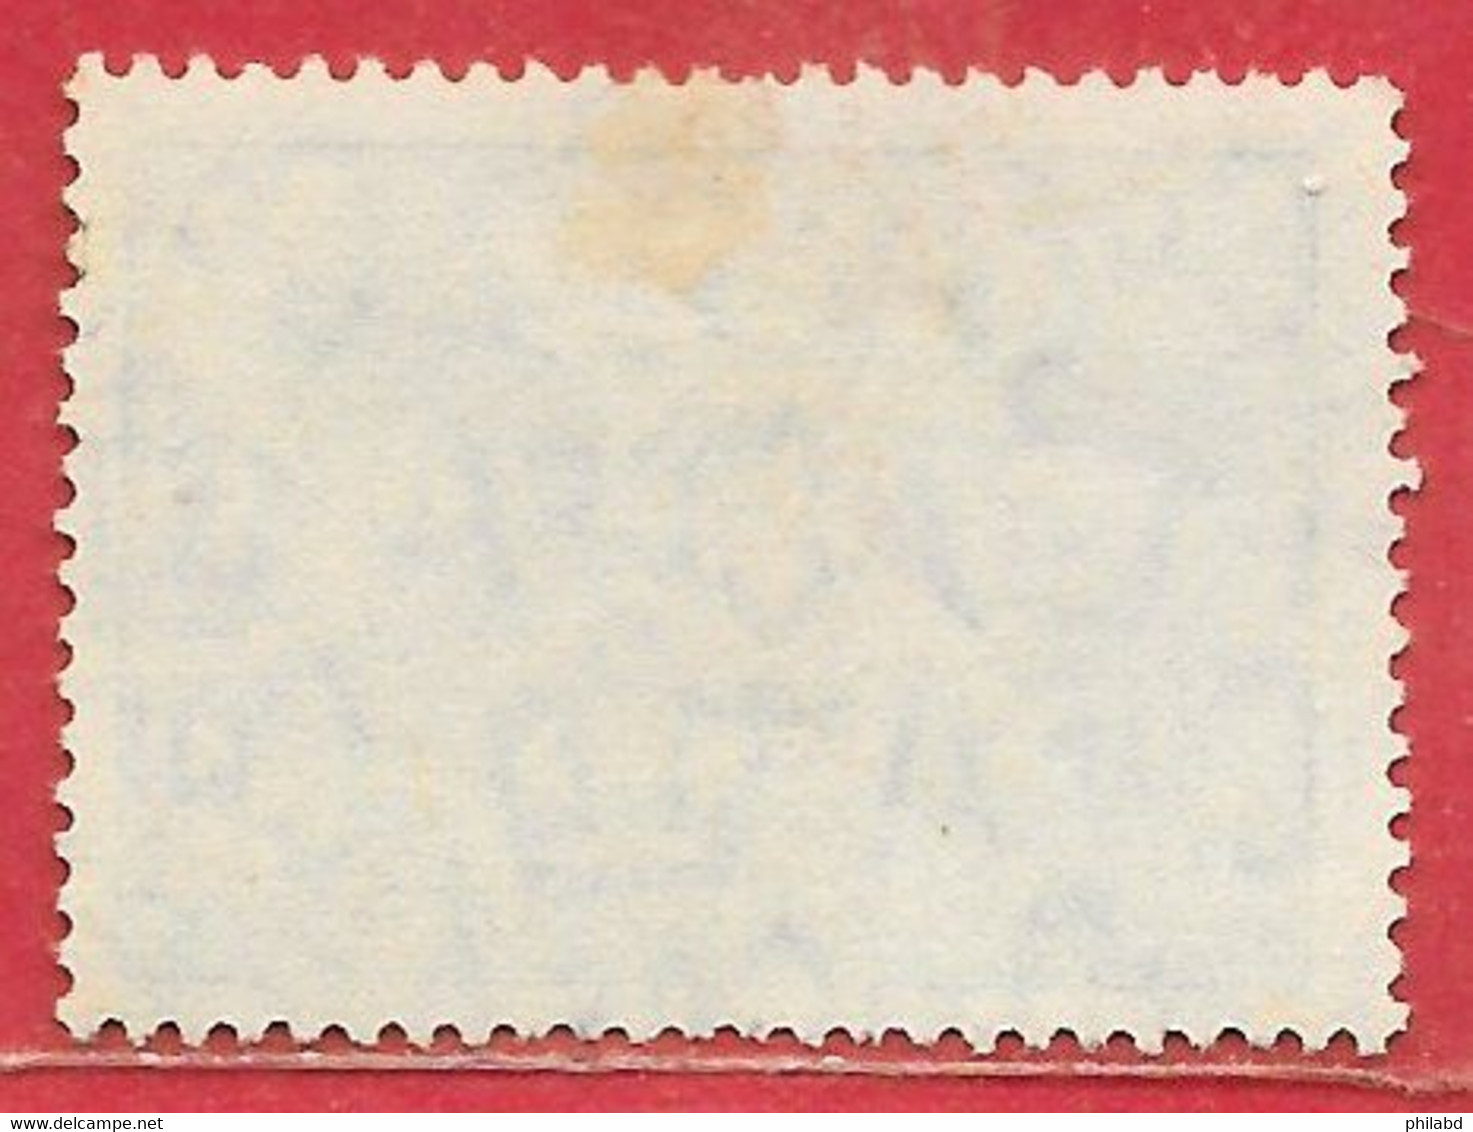 Australie PA/AM N°6 1S6p Brun-lilas1937 Mythologie Mercure O - Used Stamps